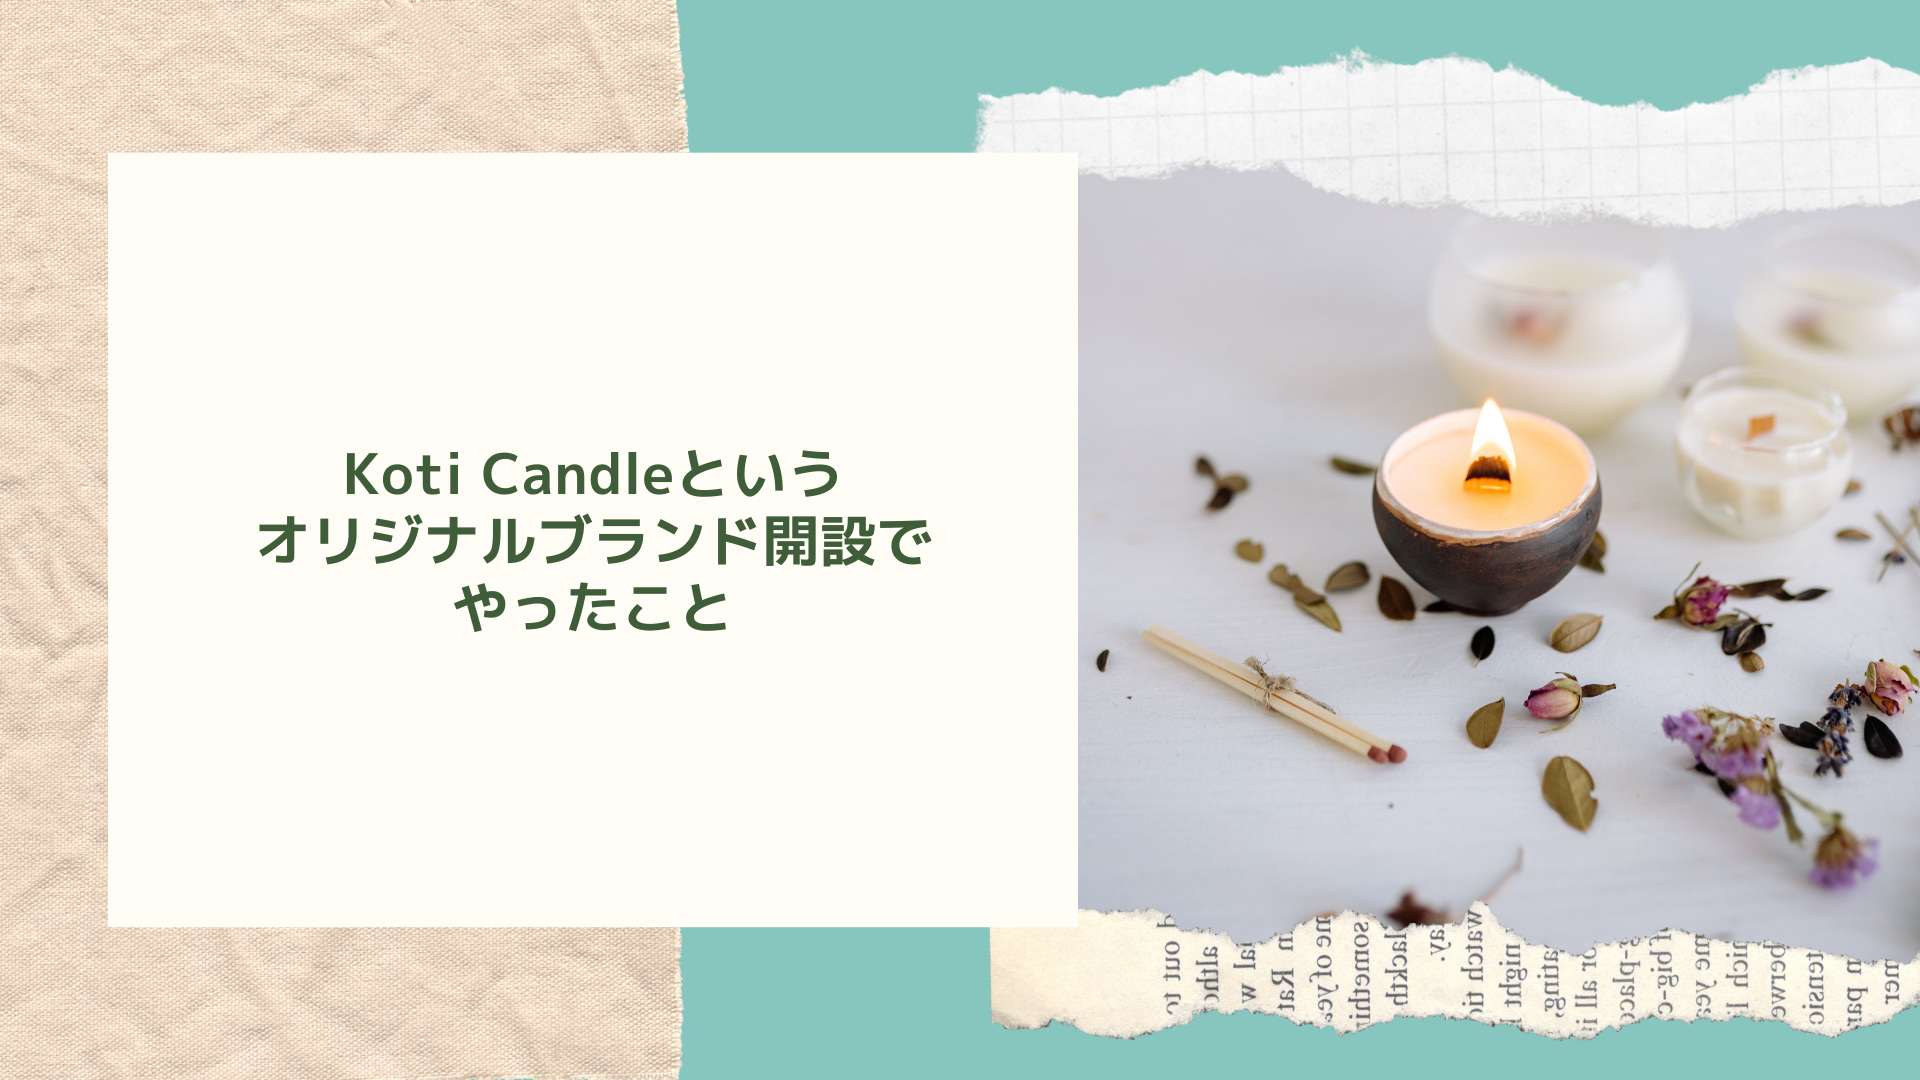 Koti Candleというオリジナルブランド開設でやったこと